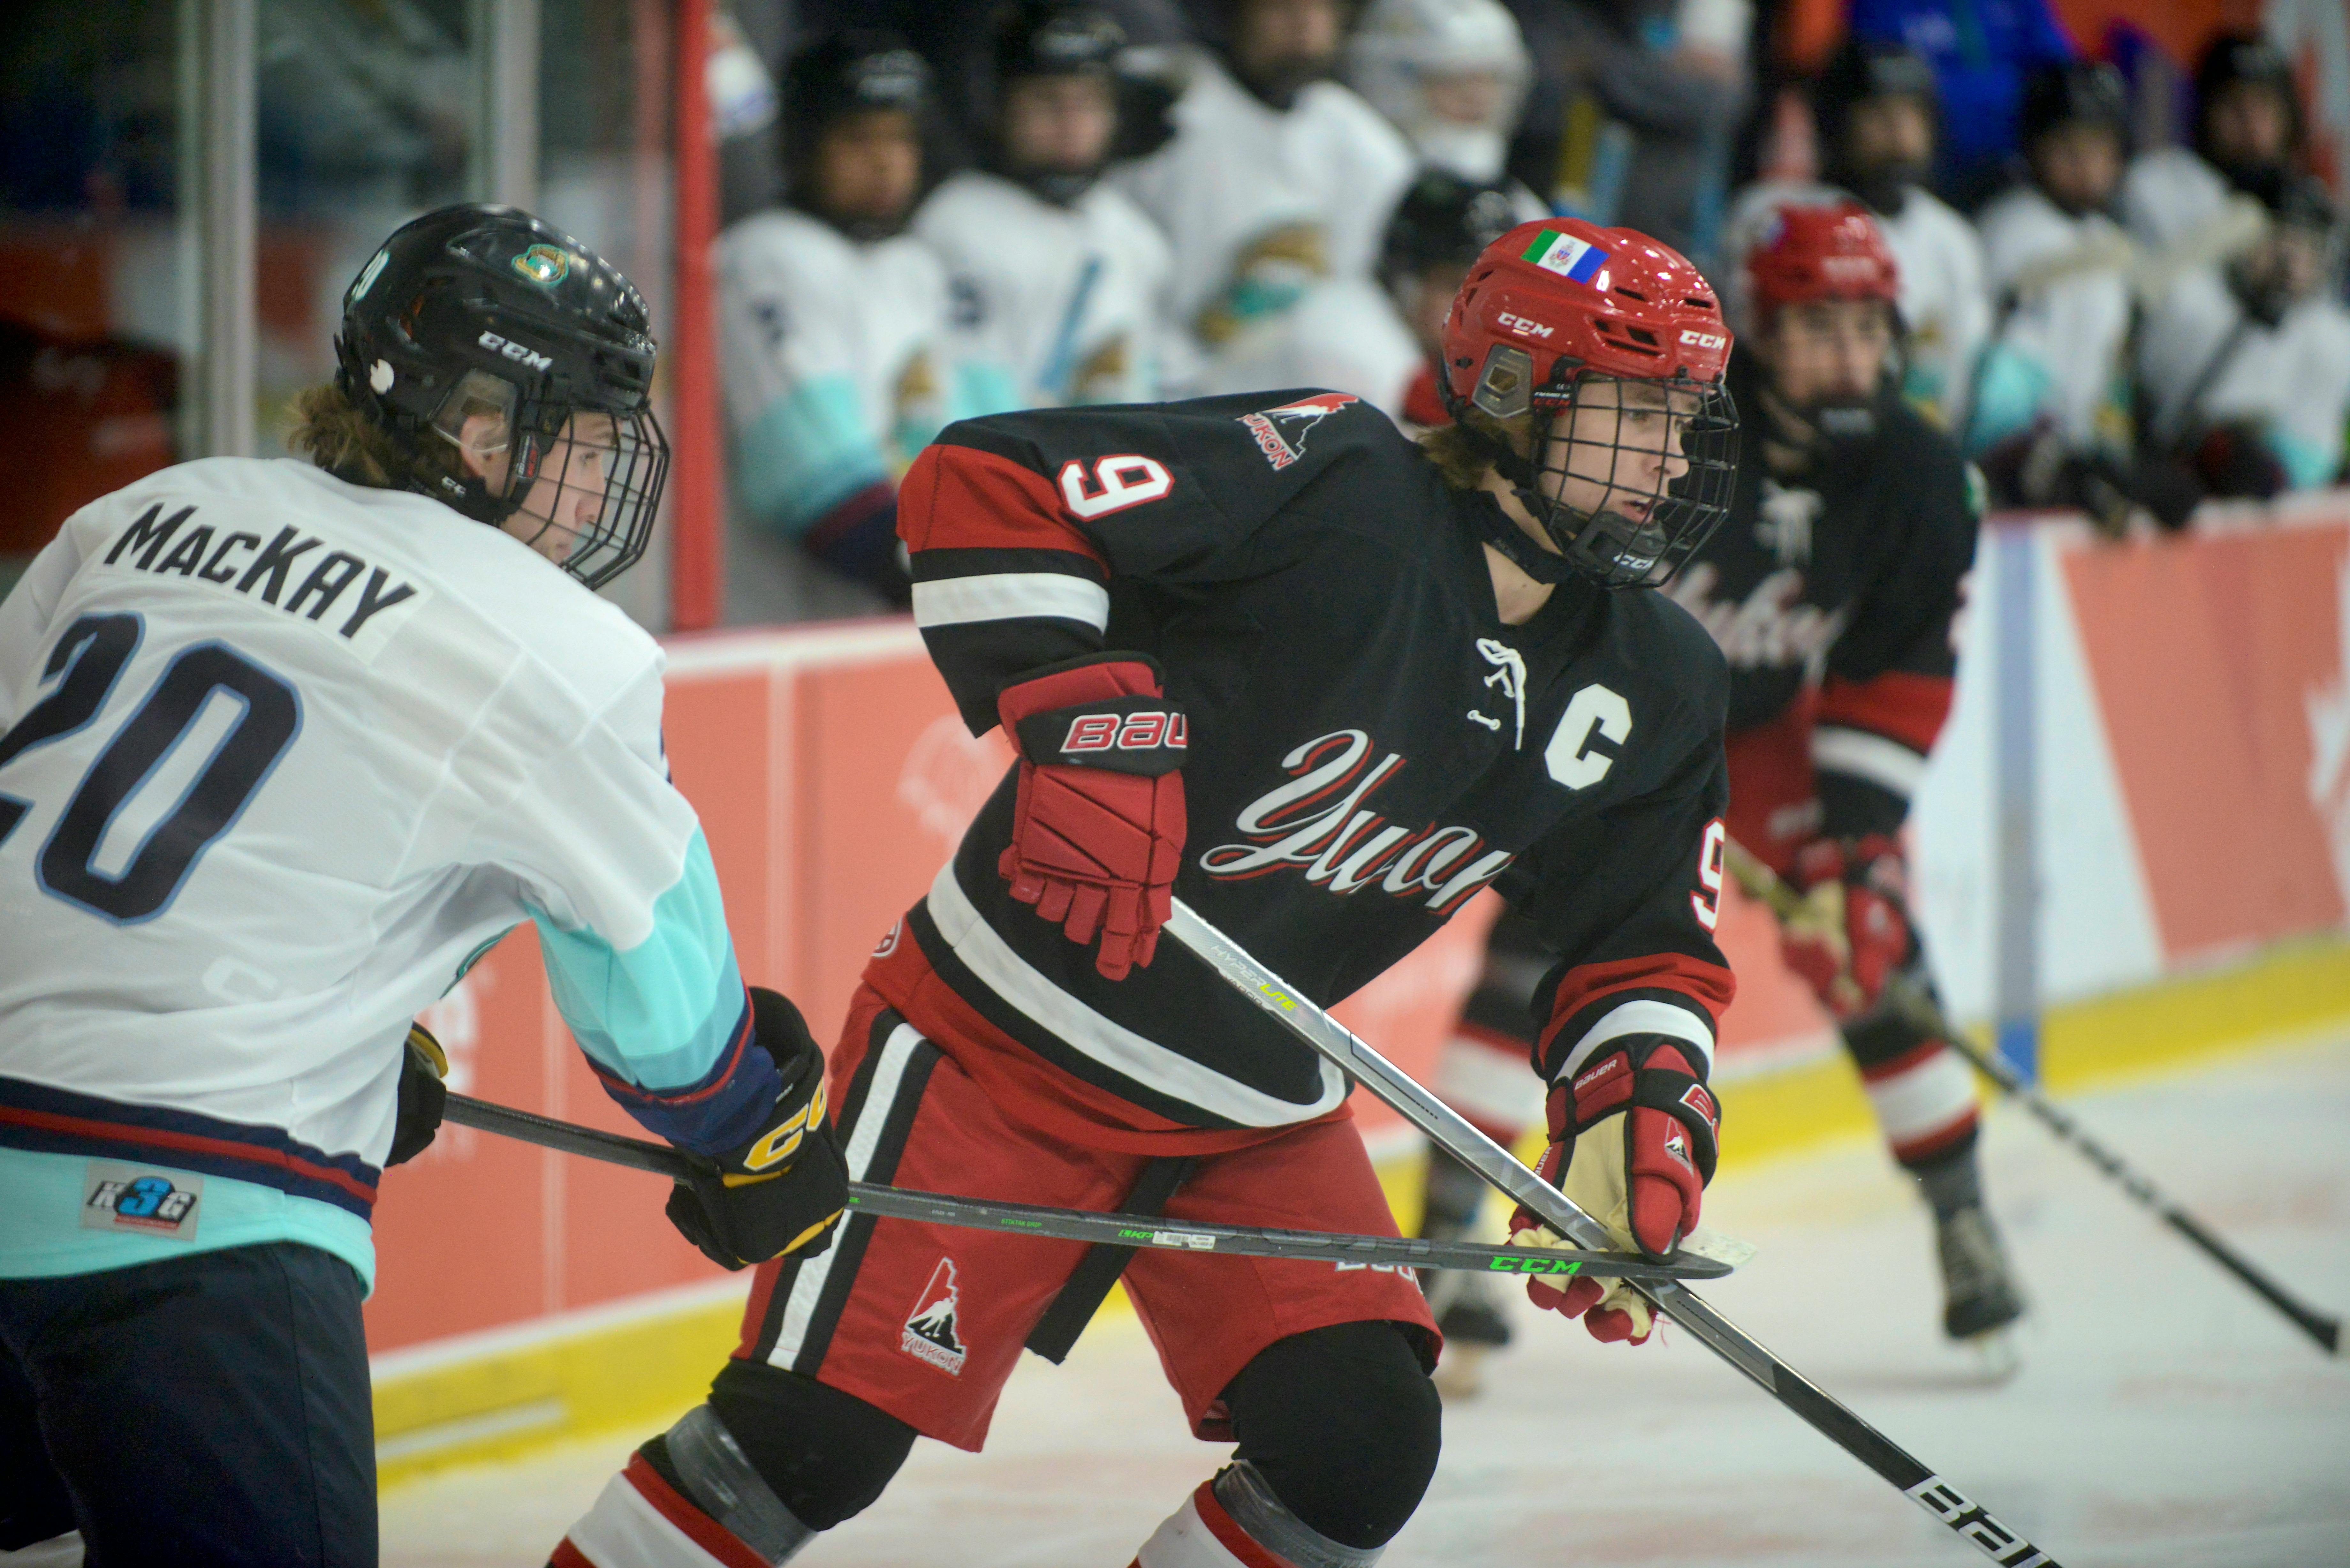 2023 starts big for Yukon teen hockey player Gavin McKenna